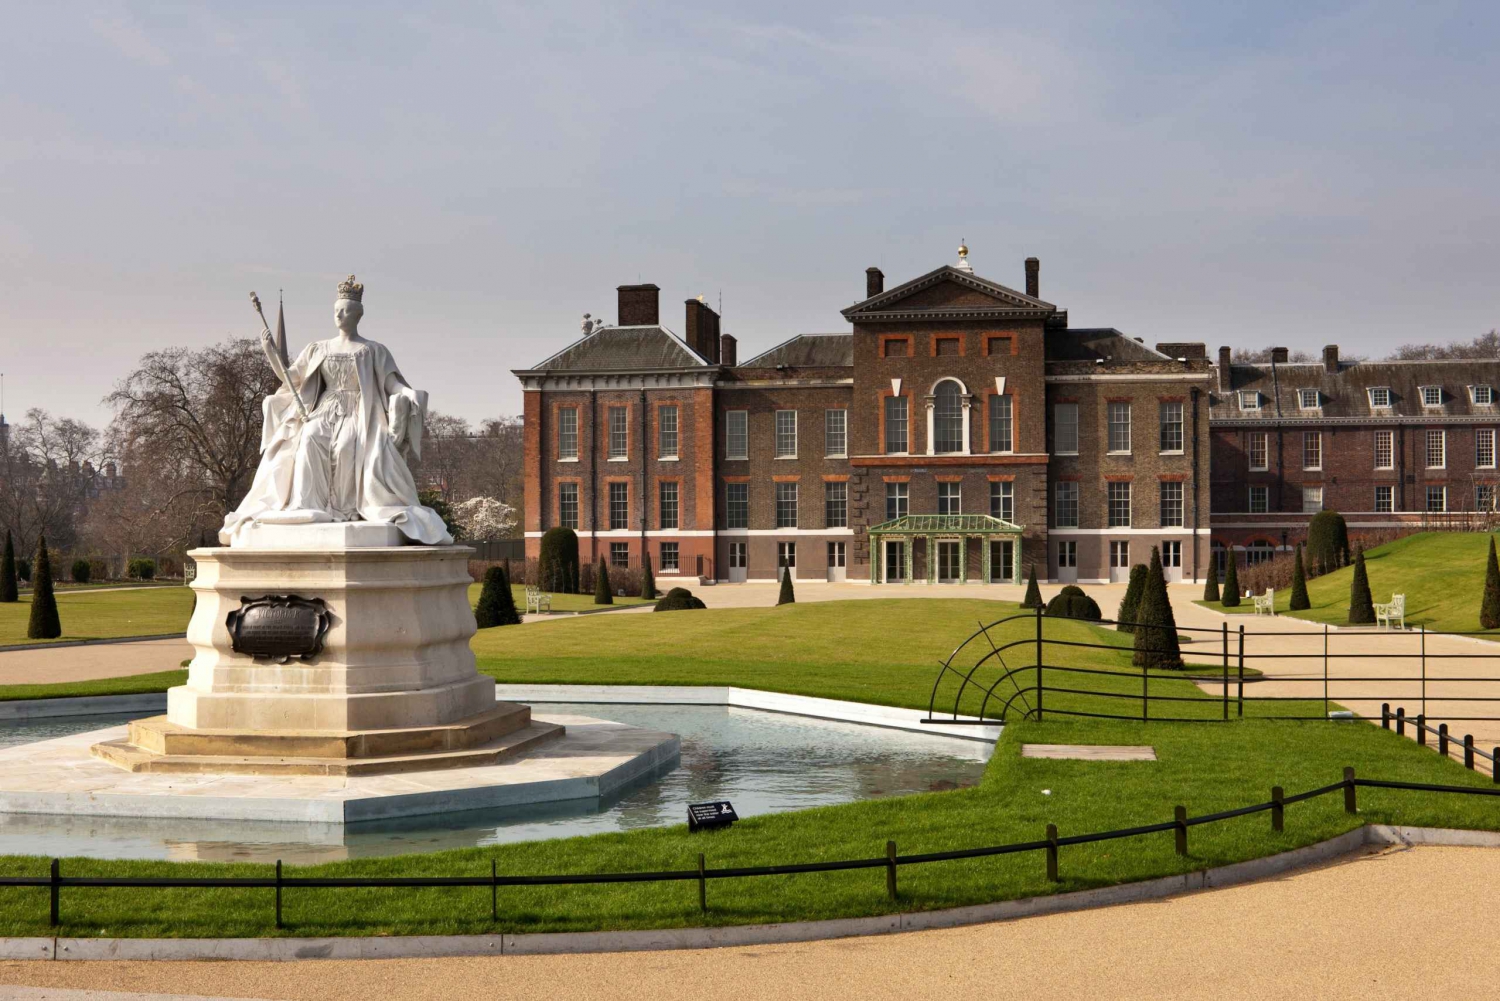 London: Kensington Palace Sightseeing Entrébilletter